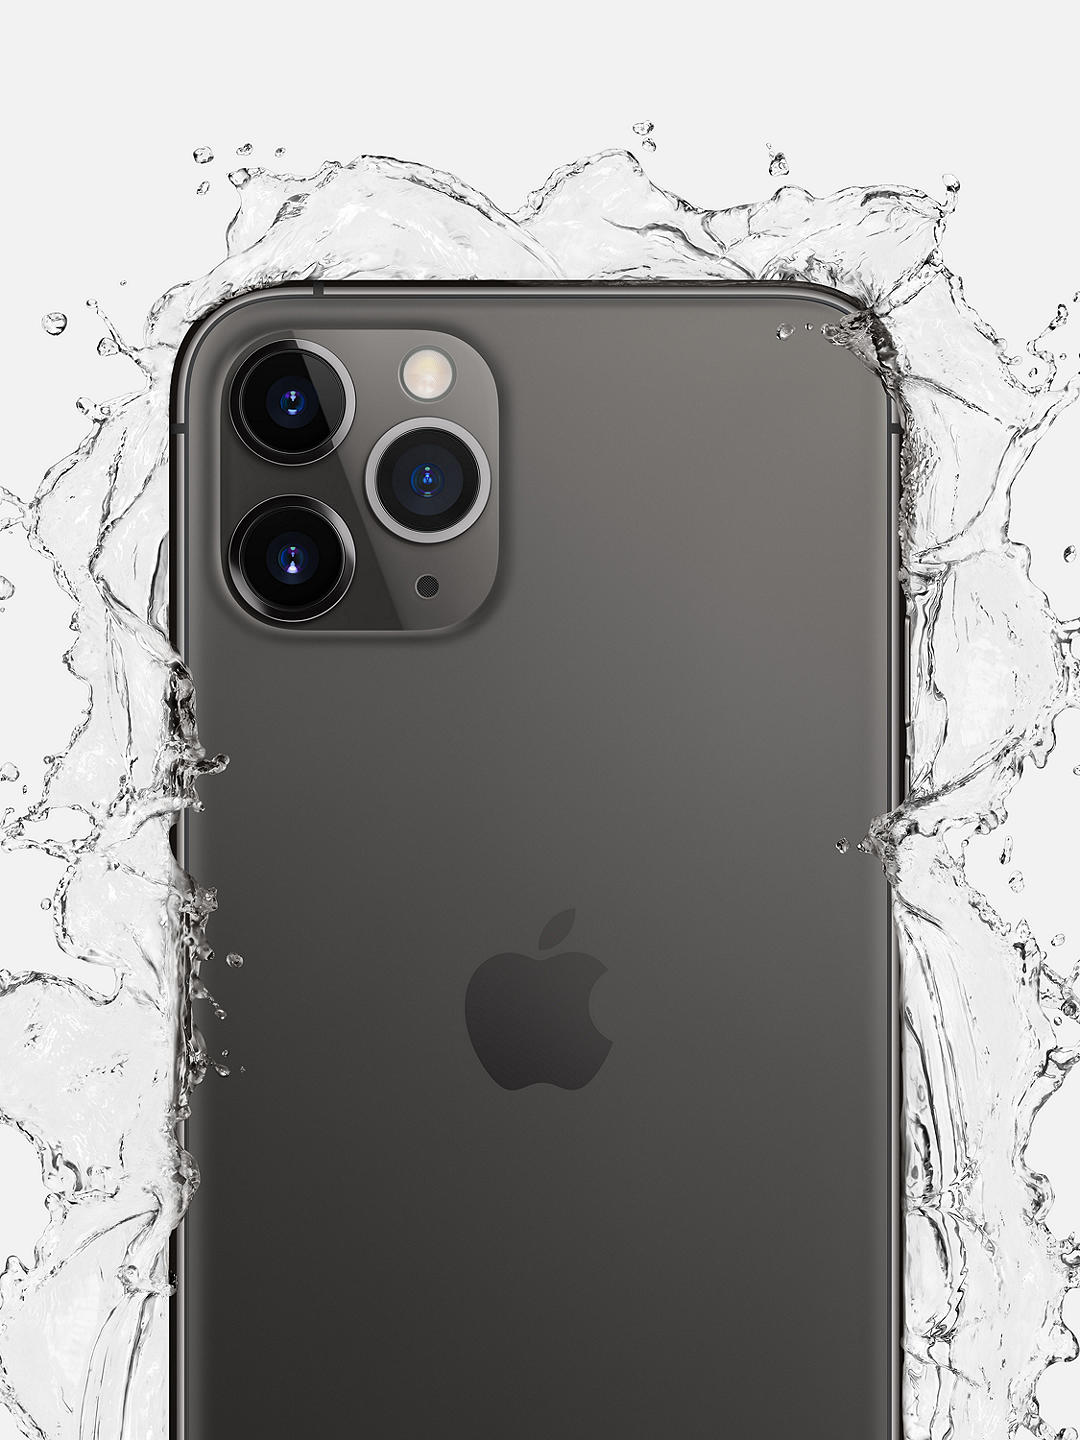 Apple iPhone 11 Pro 256GB gray